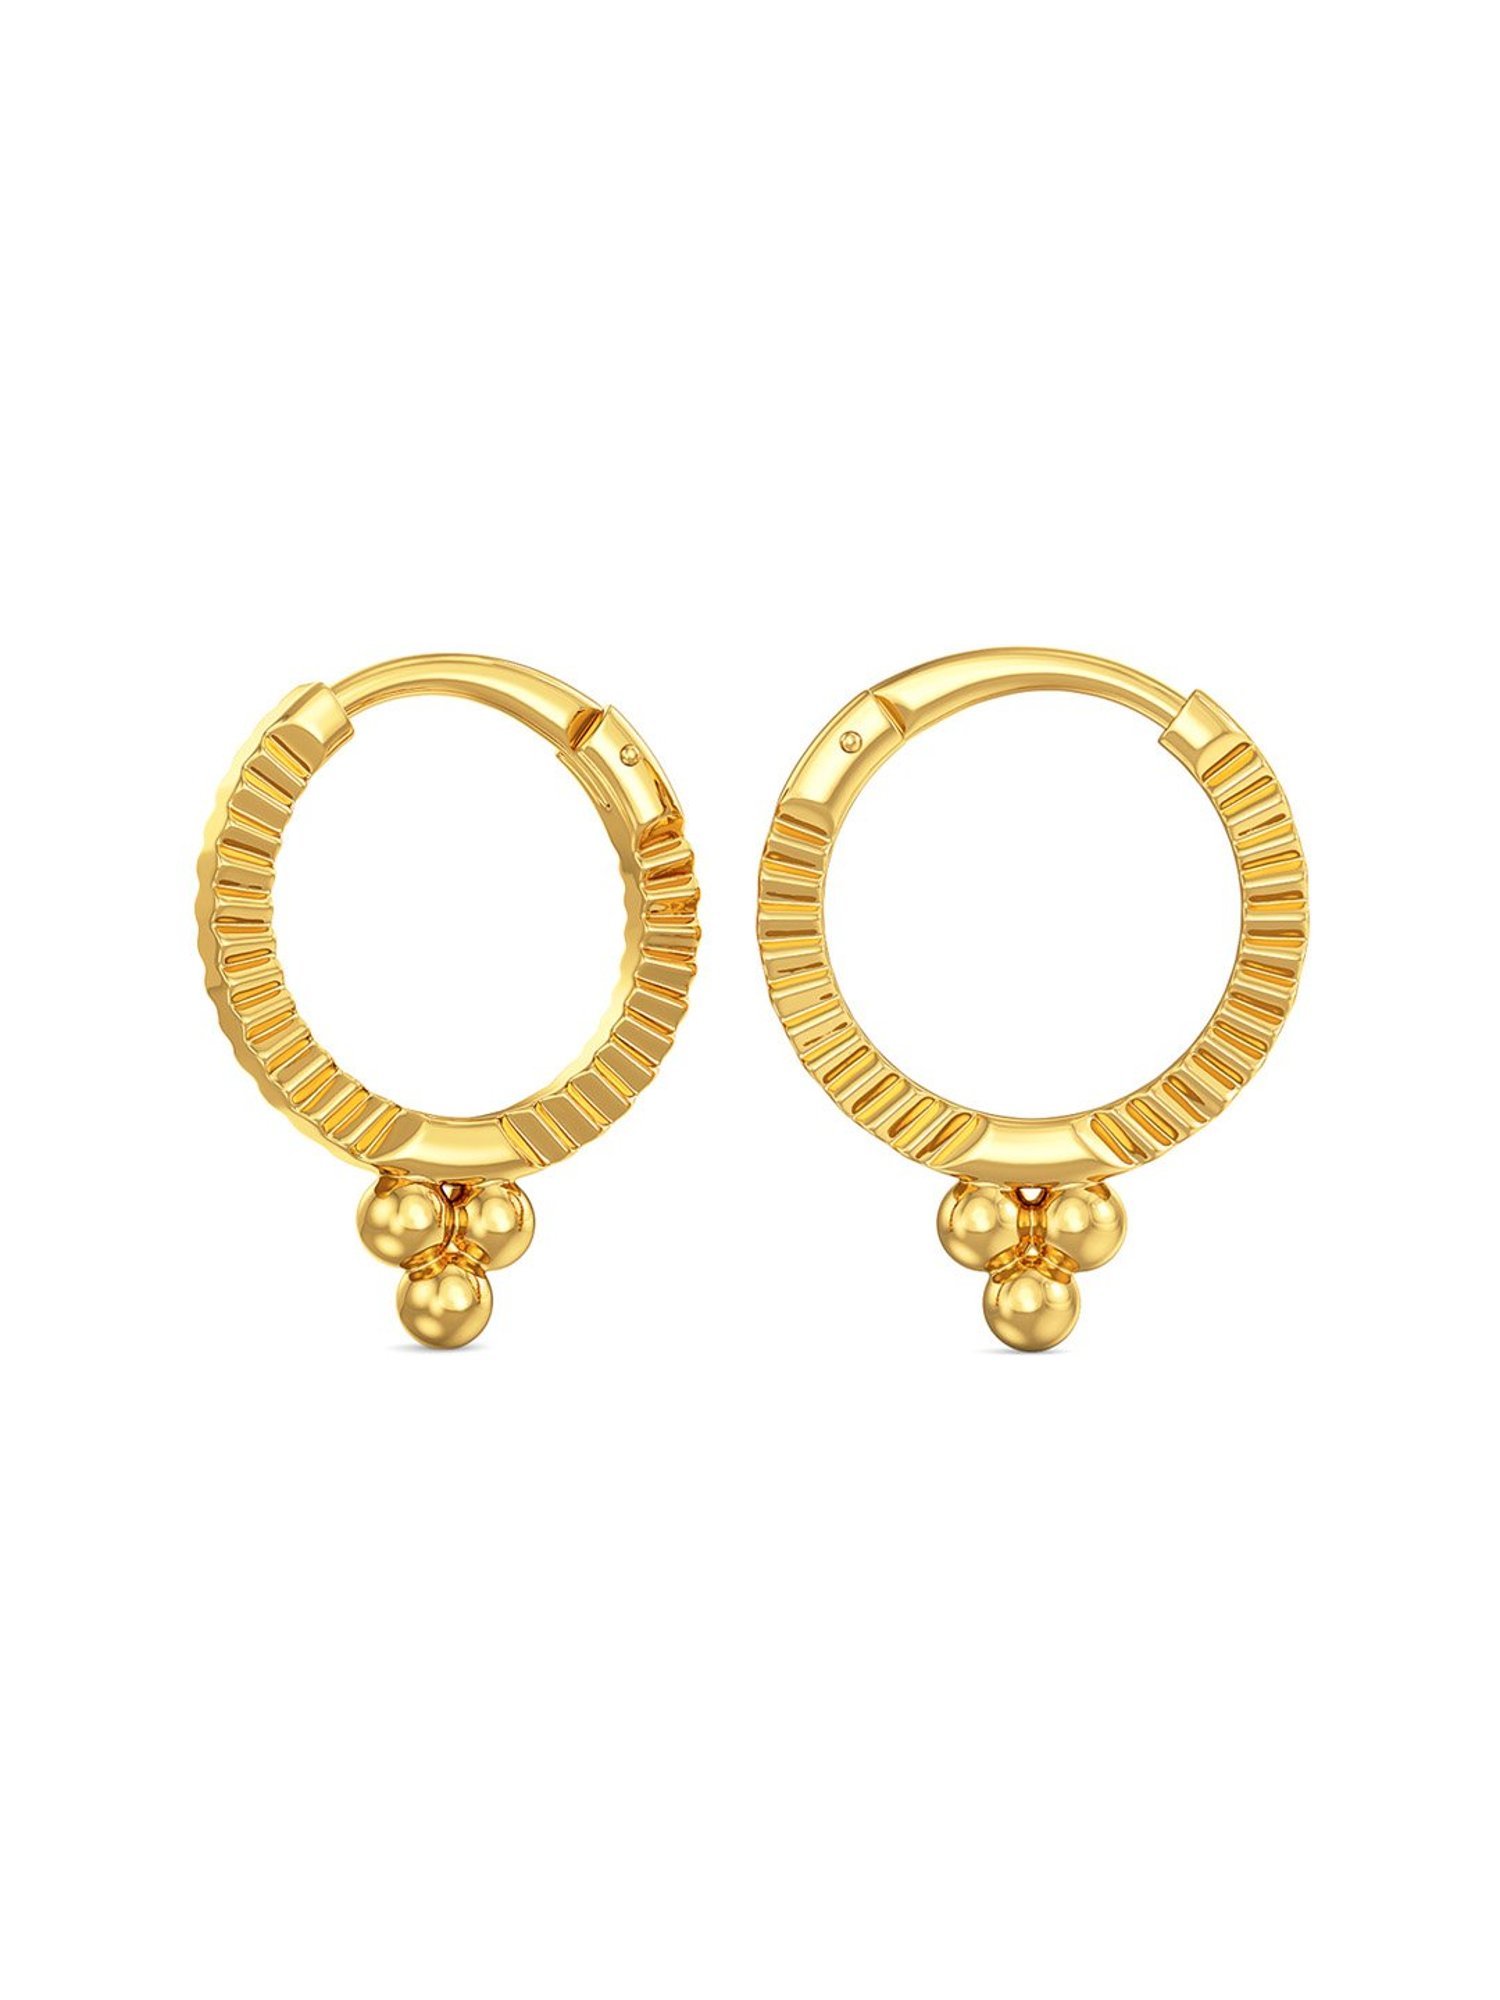 17% OFF on Joyalukkas 22k Yellow Gold Jhumki Earrings for Women on Amazon |  PaisaWapas.com